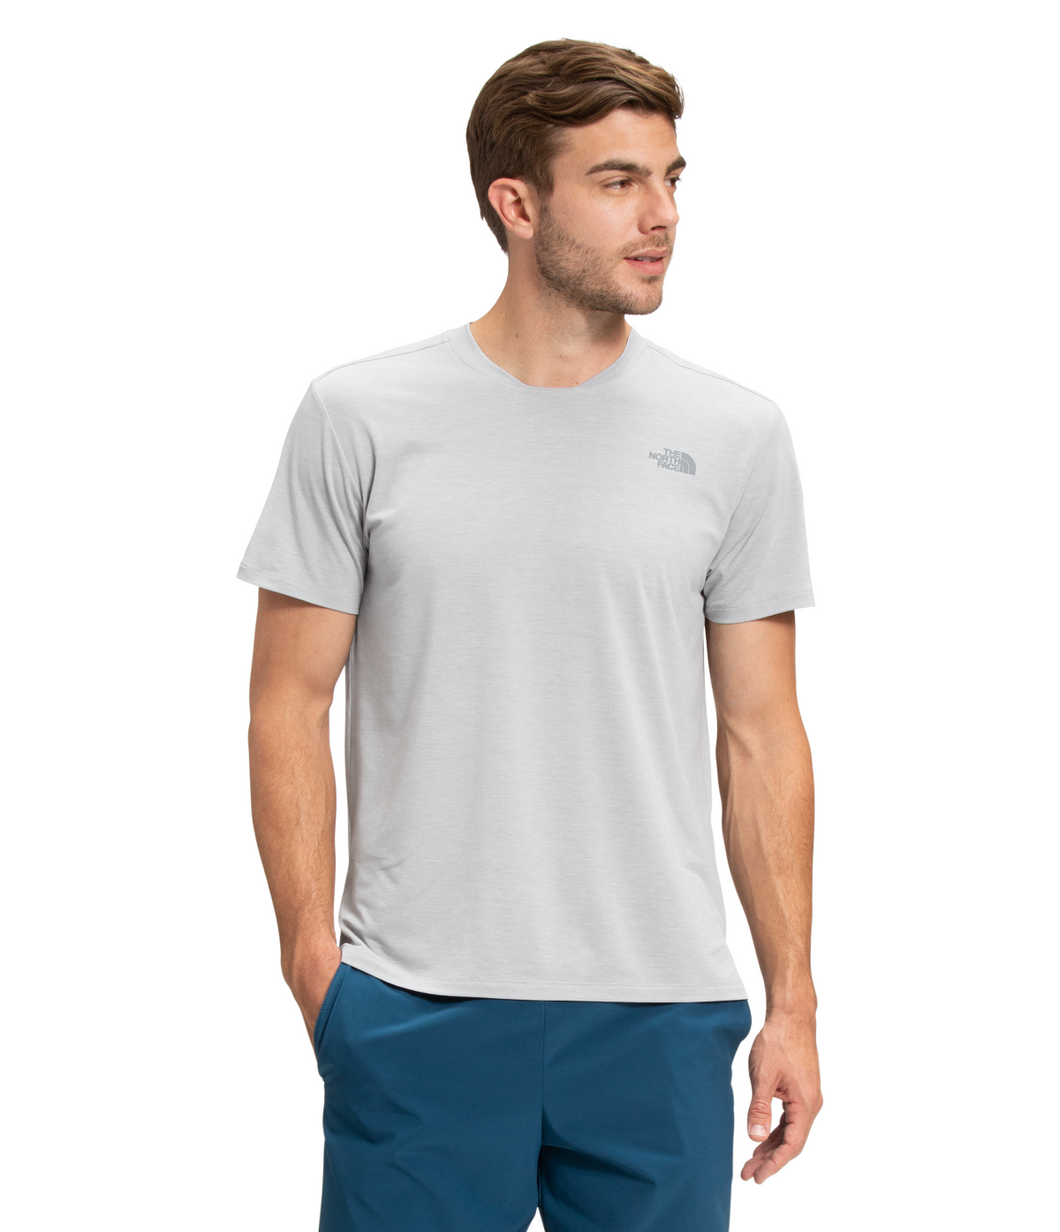 'The North Face' Men's Wander T-Shirt - Light Grey Heather